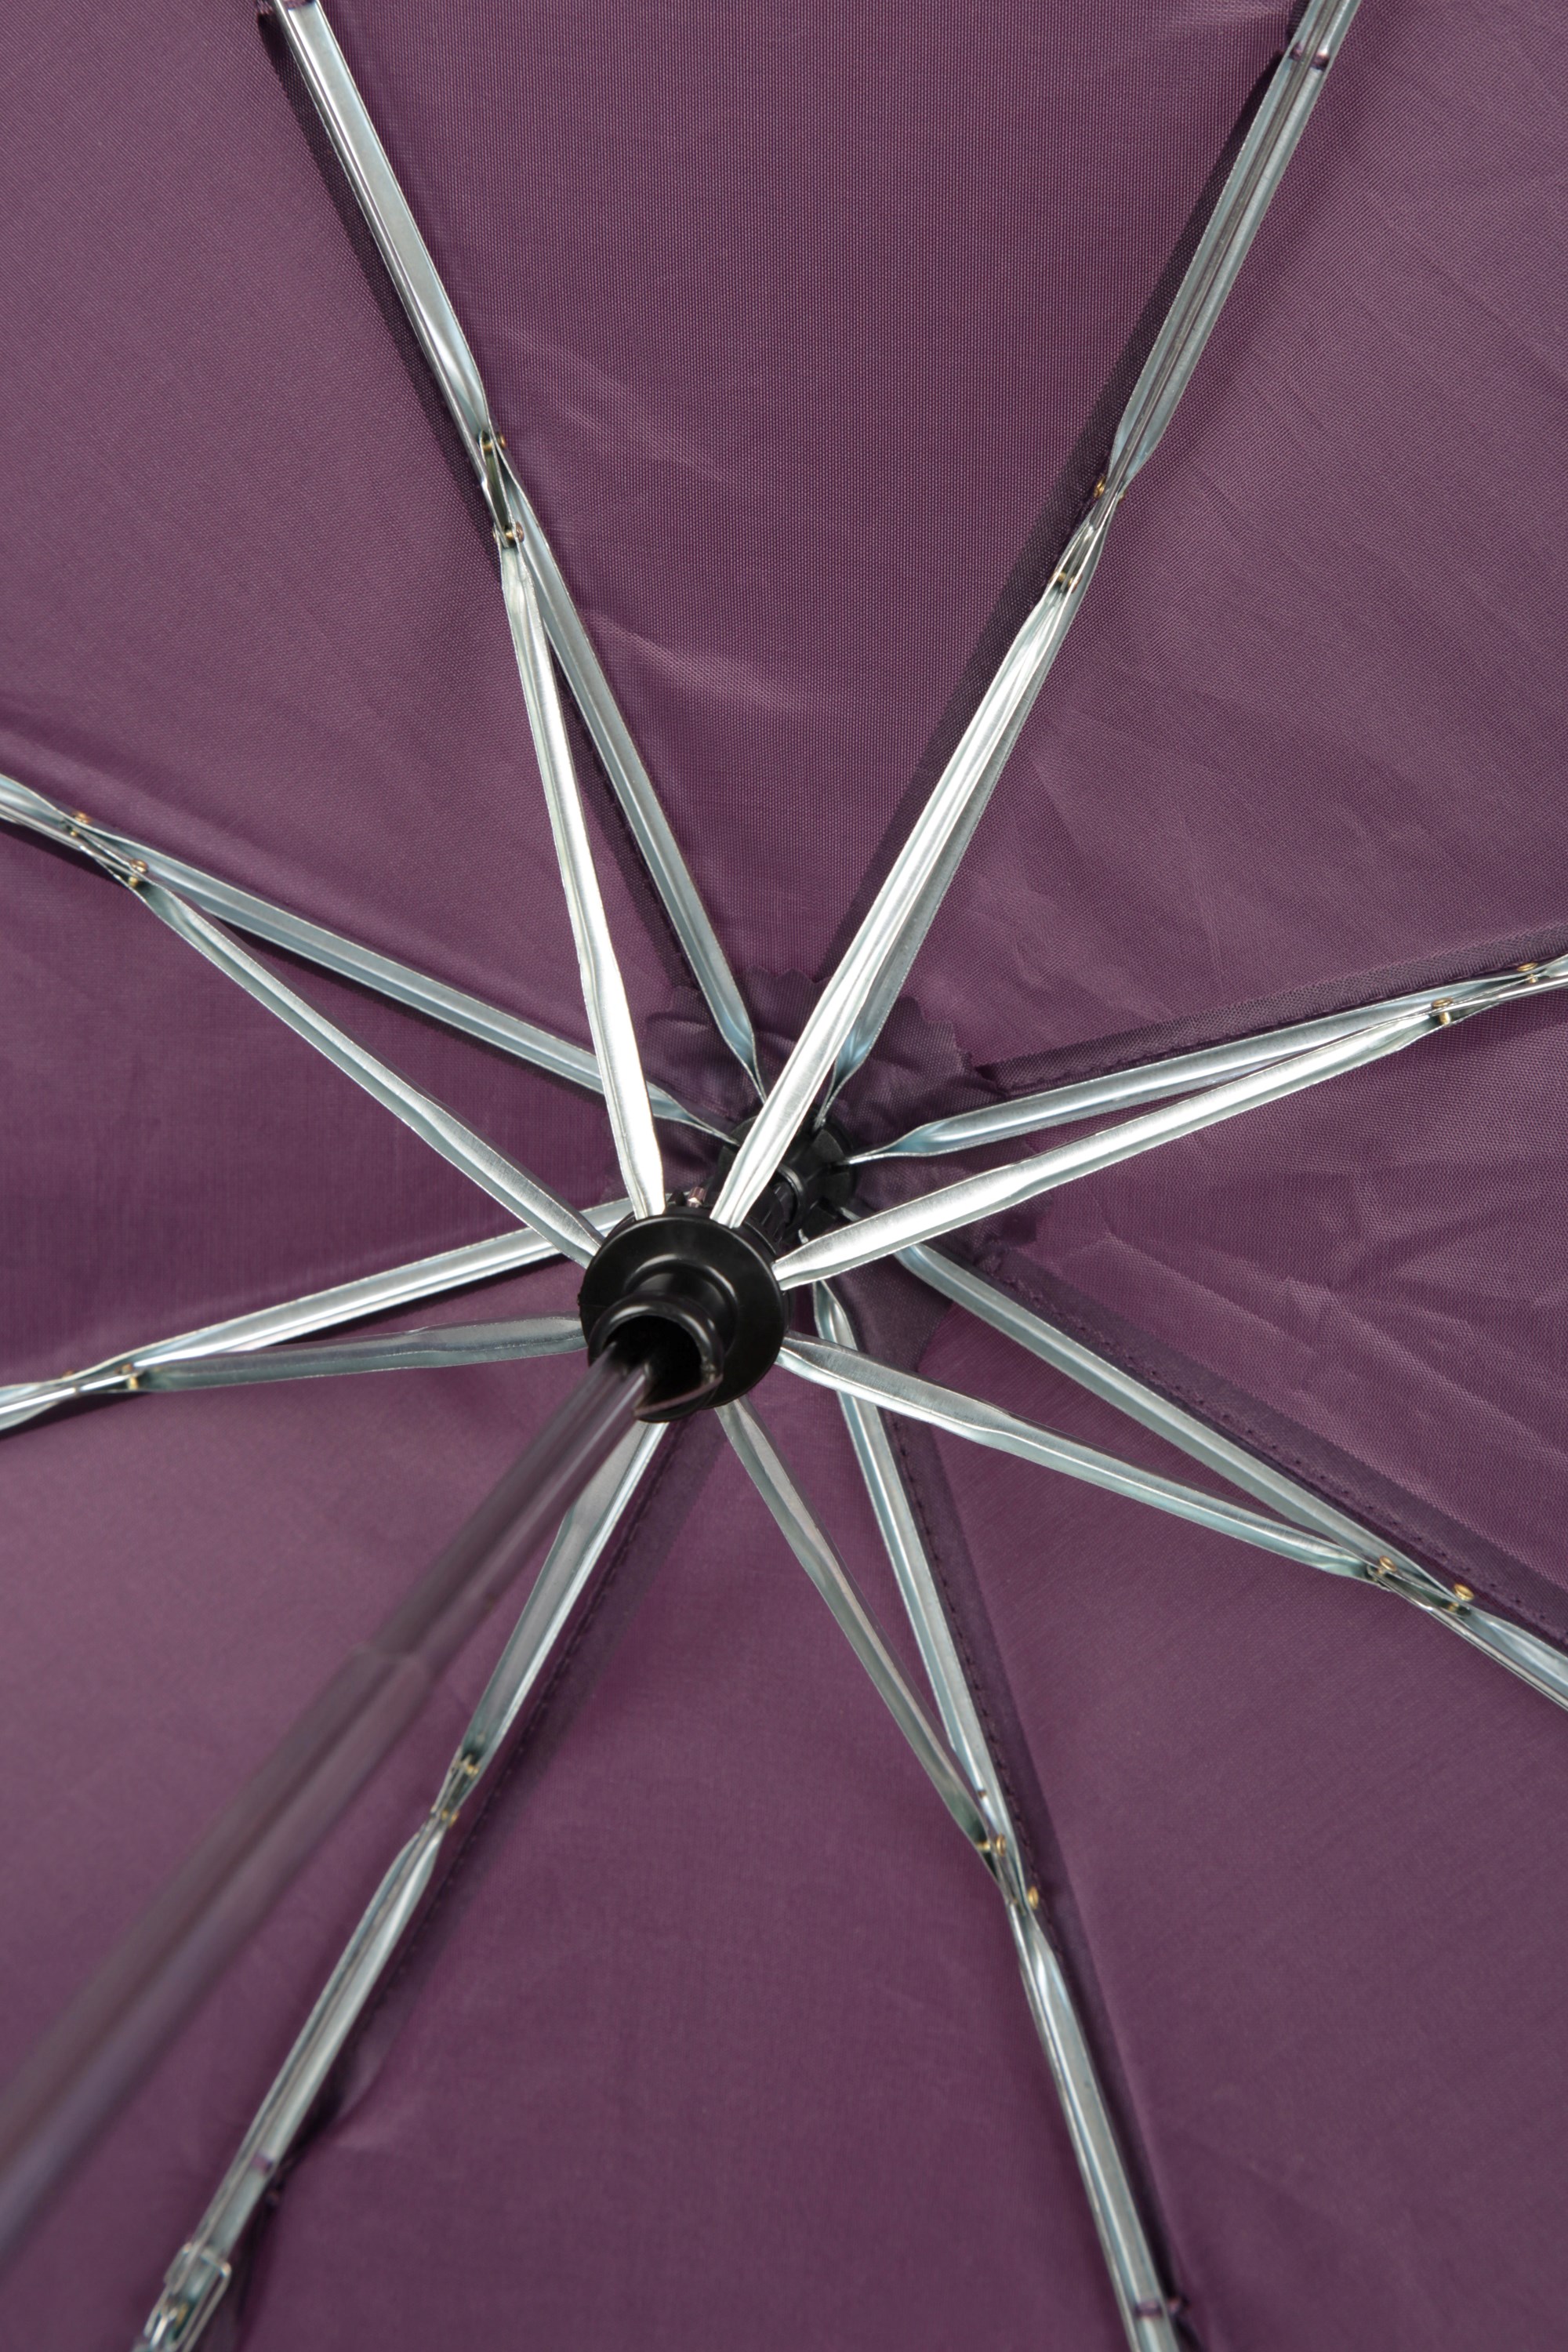 Mini Umbrella - Plain